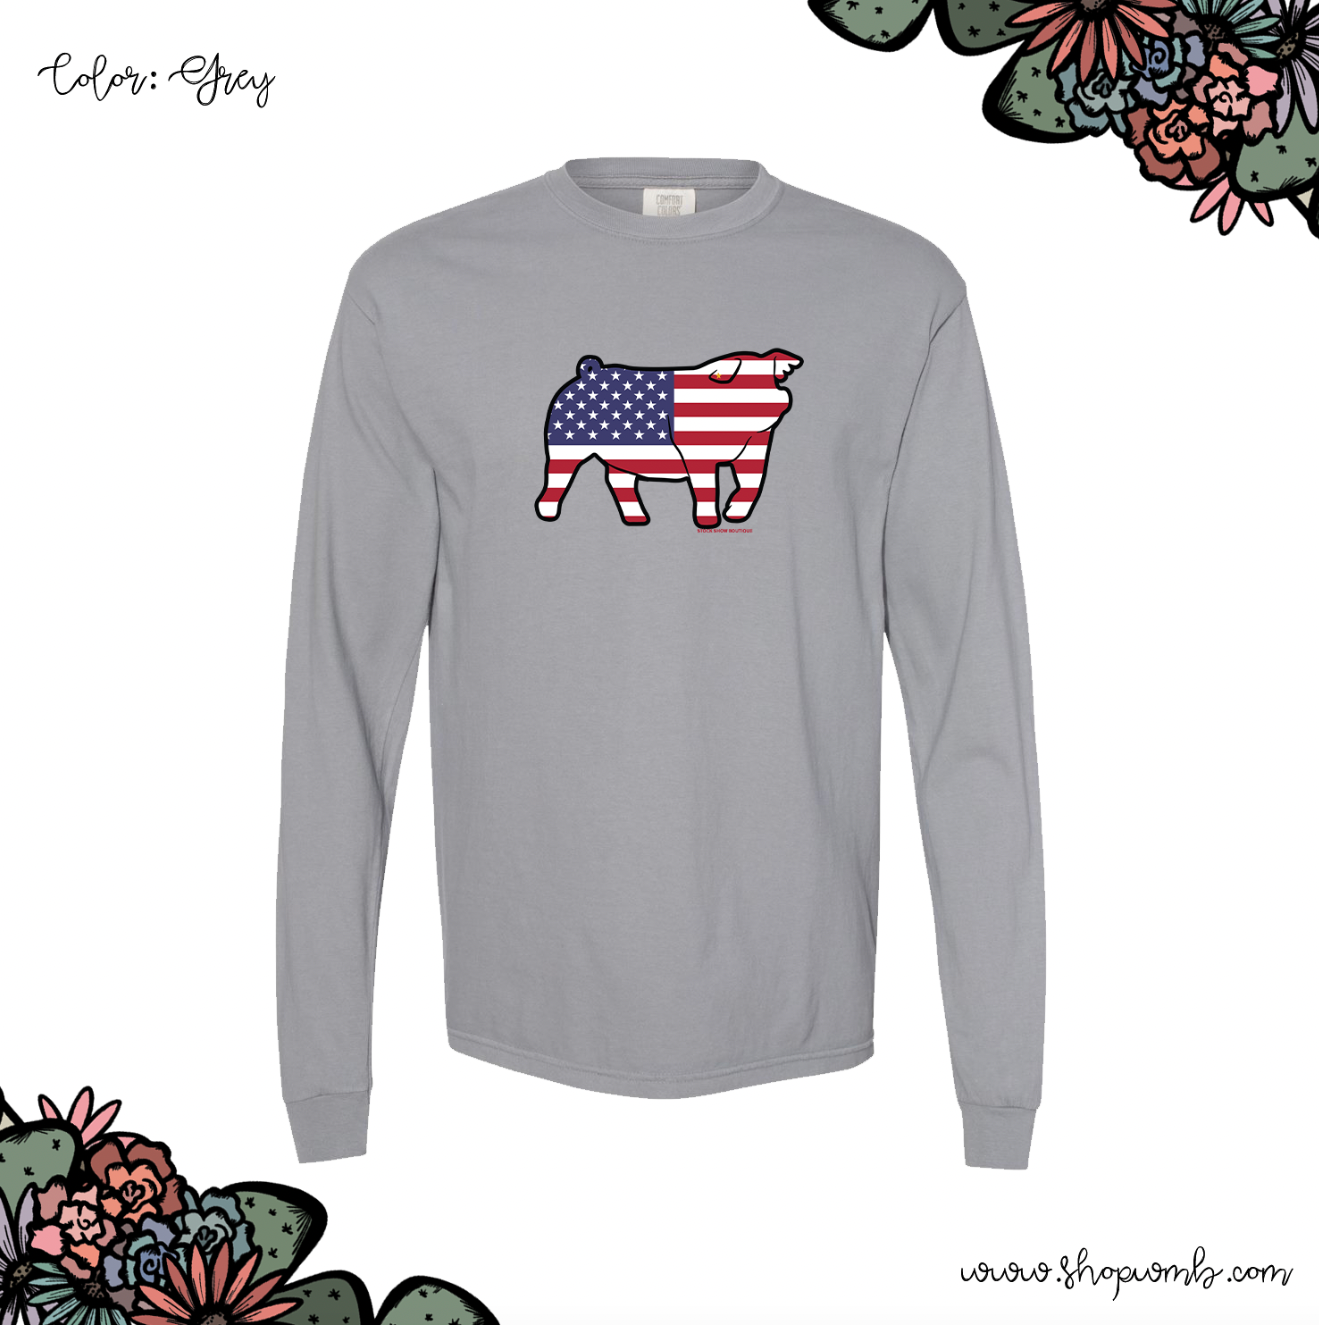 Patriotic Pig Down Ear LONG SLEEVE T-Shirt (S-3XL) - Multiple Colors!